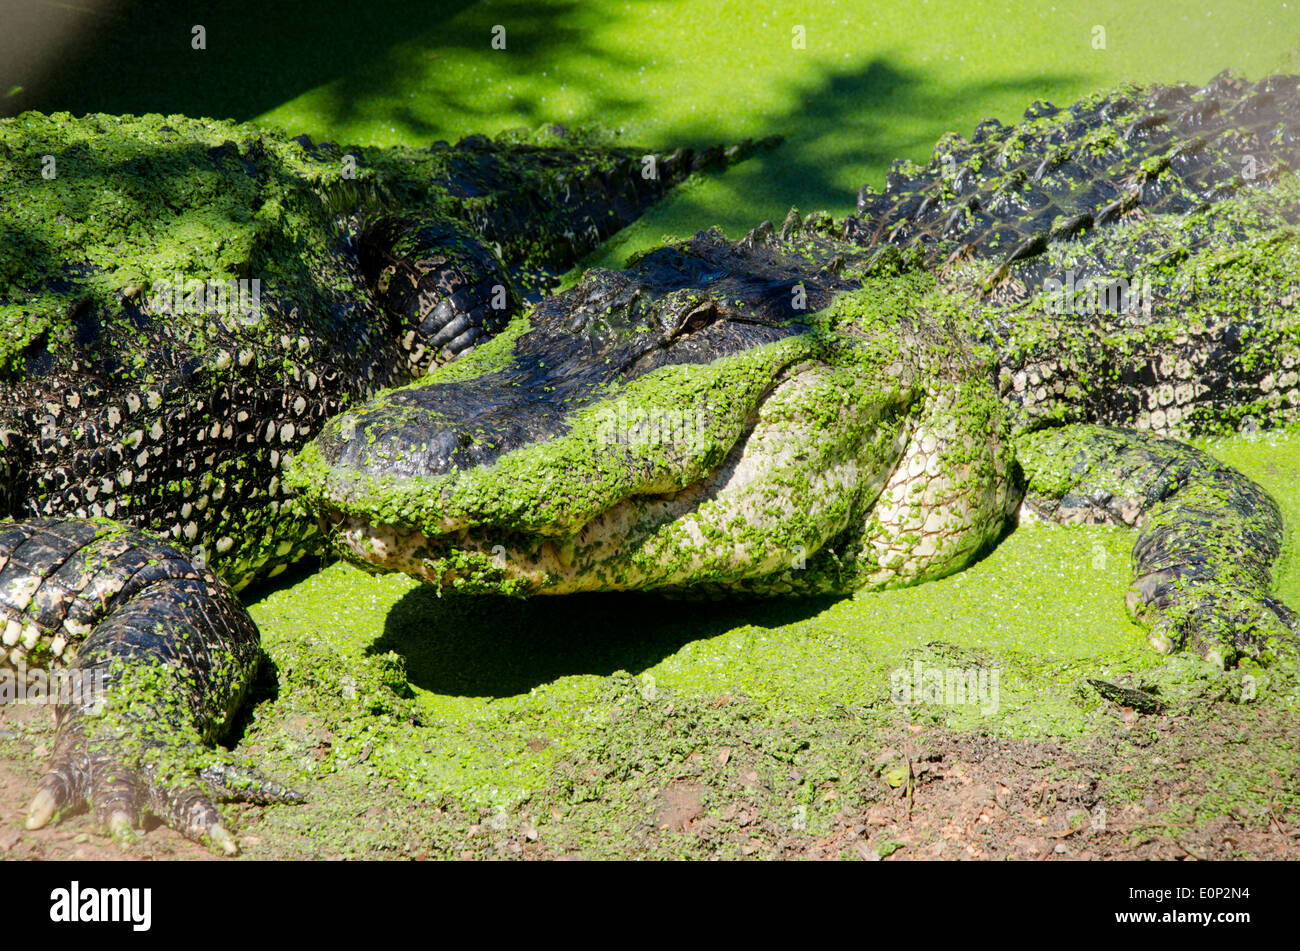 Australien, Western Australia, Broome. Malcolm Douglas Crocodile Park. Große amerikanische Alligator. Stockfoto